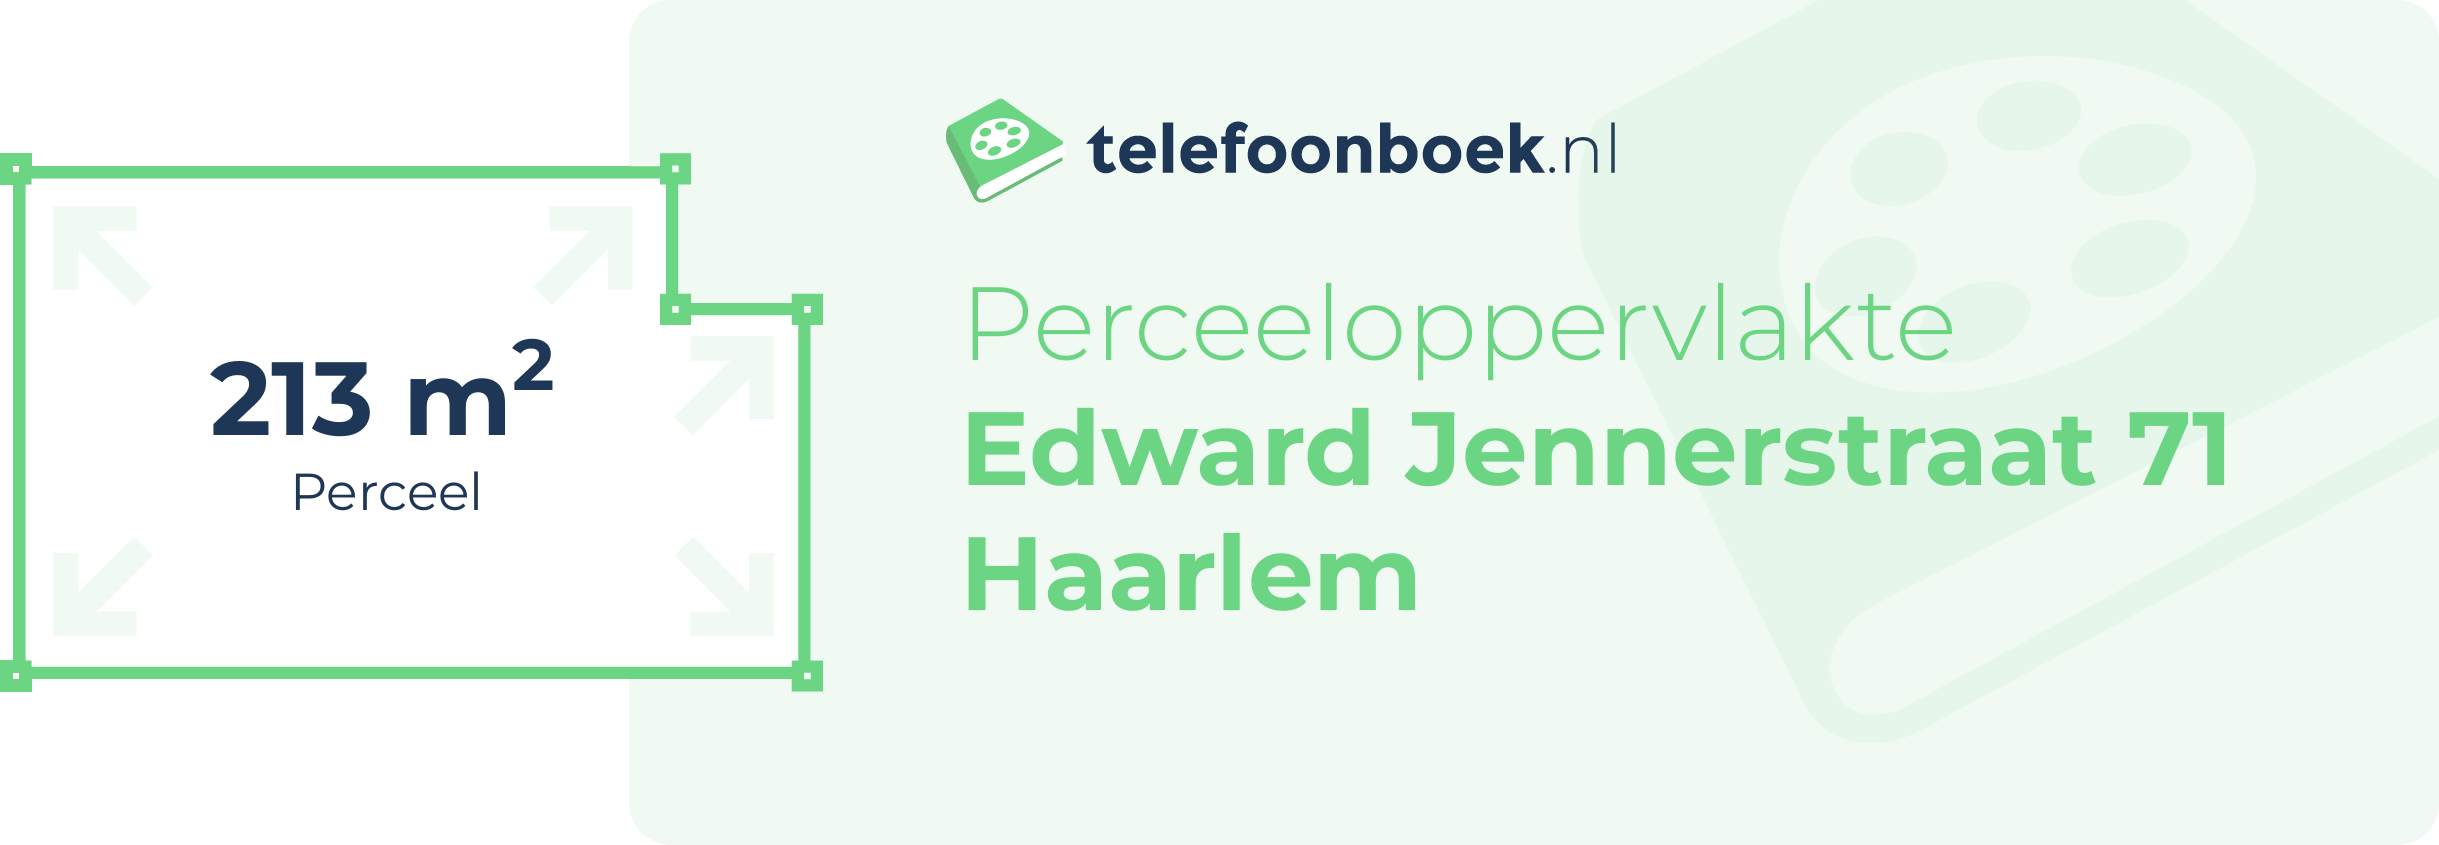 Perceeloppervlakte Edward Jennerstraat 71 Haarlem